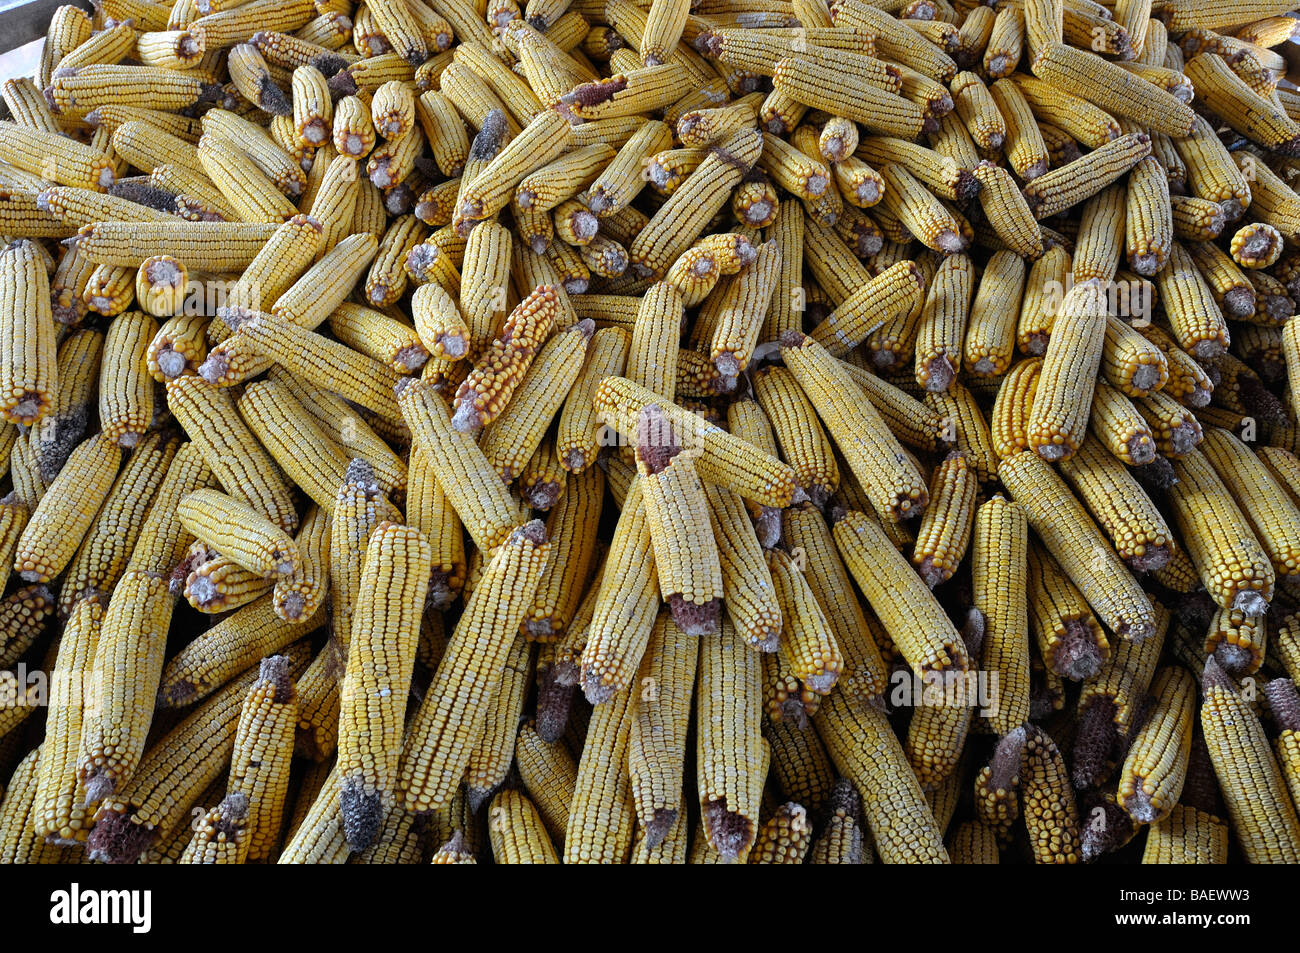 Almacenamiento de maíz en la aldea de Vojka en Vojvodina, Serbia. Foto de stock